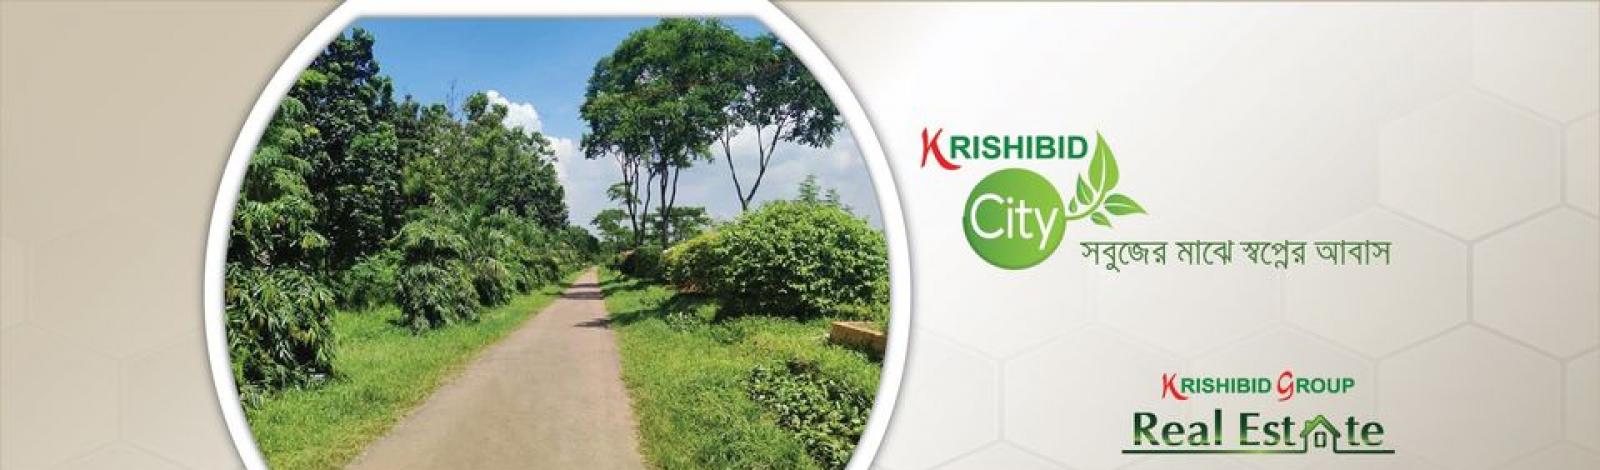 Krishibid Group Real Estate banner